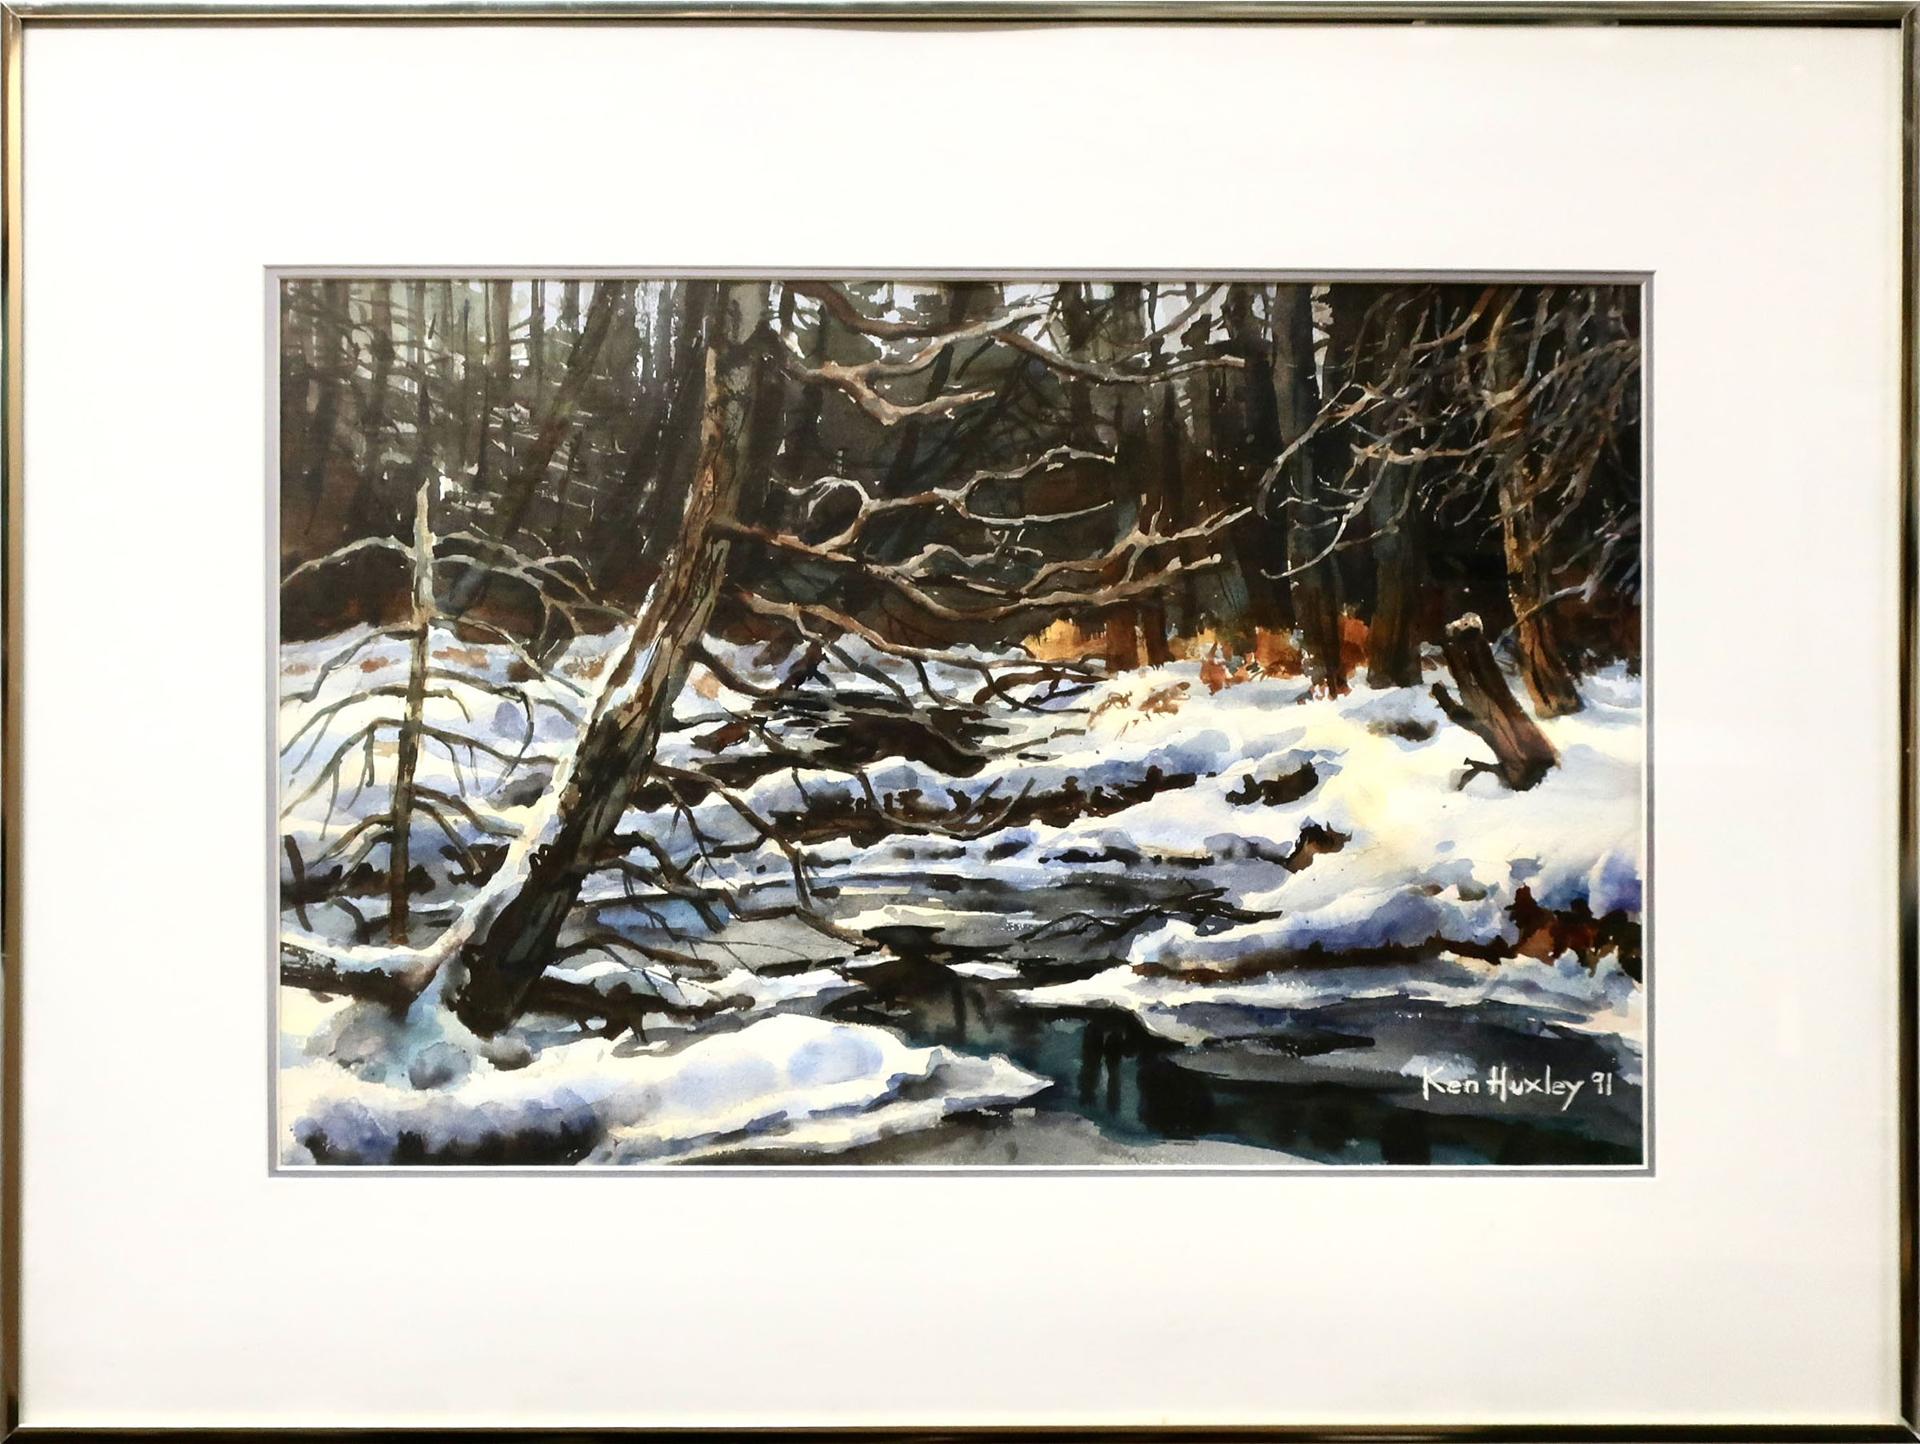 Ken Huxley - Winter Reflections - Grindstone Creek (Waterdown, Ont.)